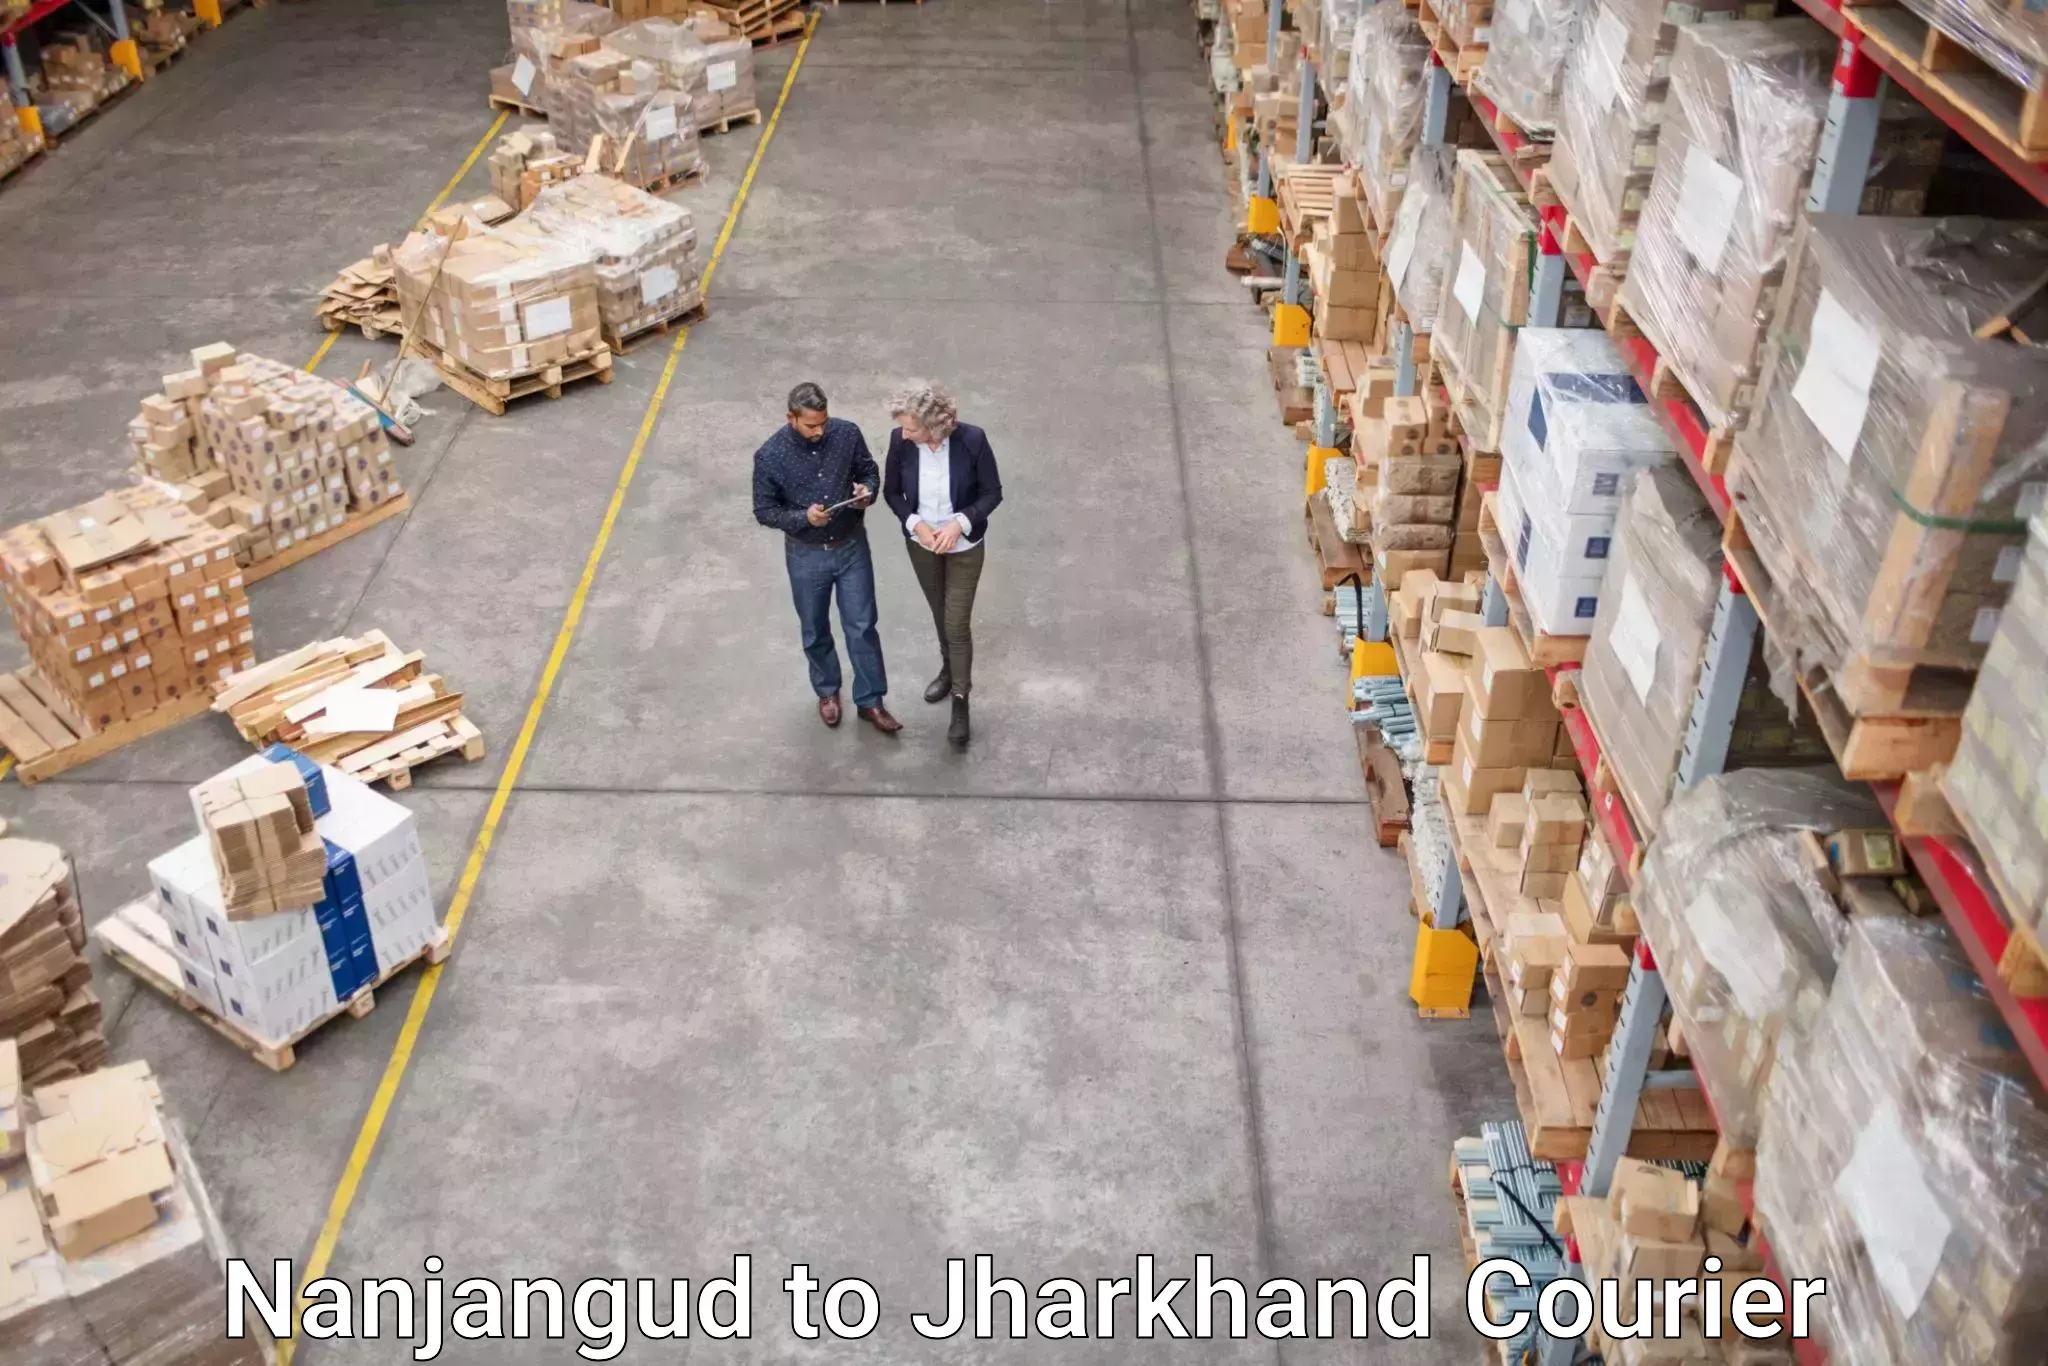 Nationwide delivery network Nanjangud to Shikaripara